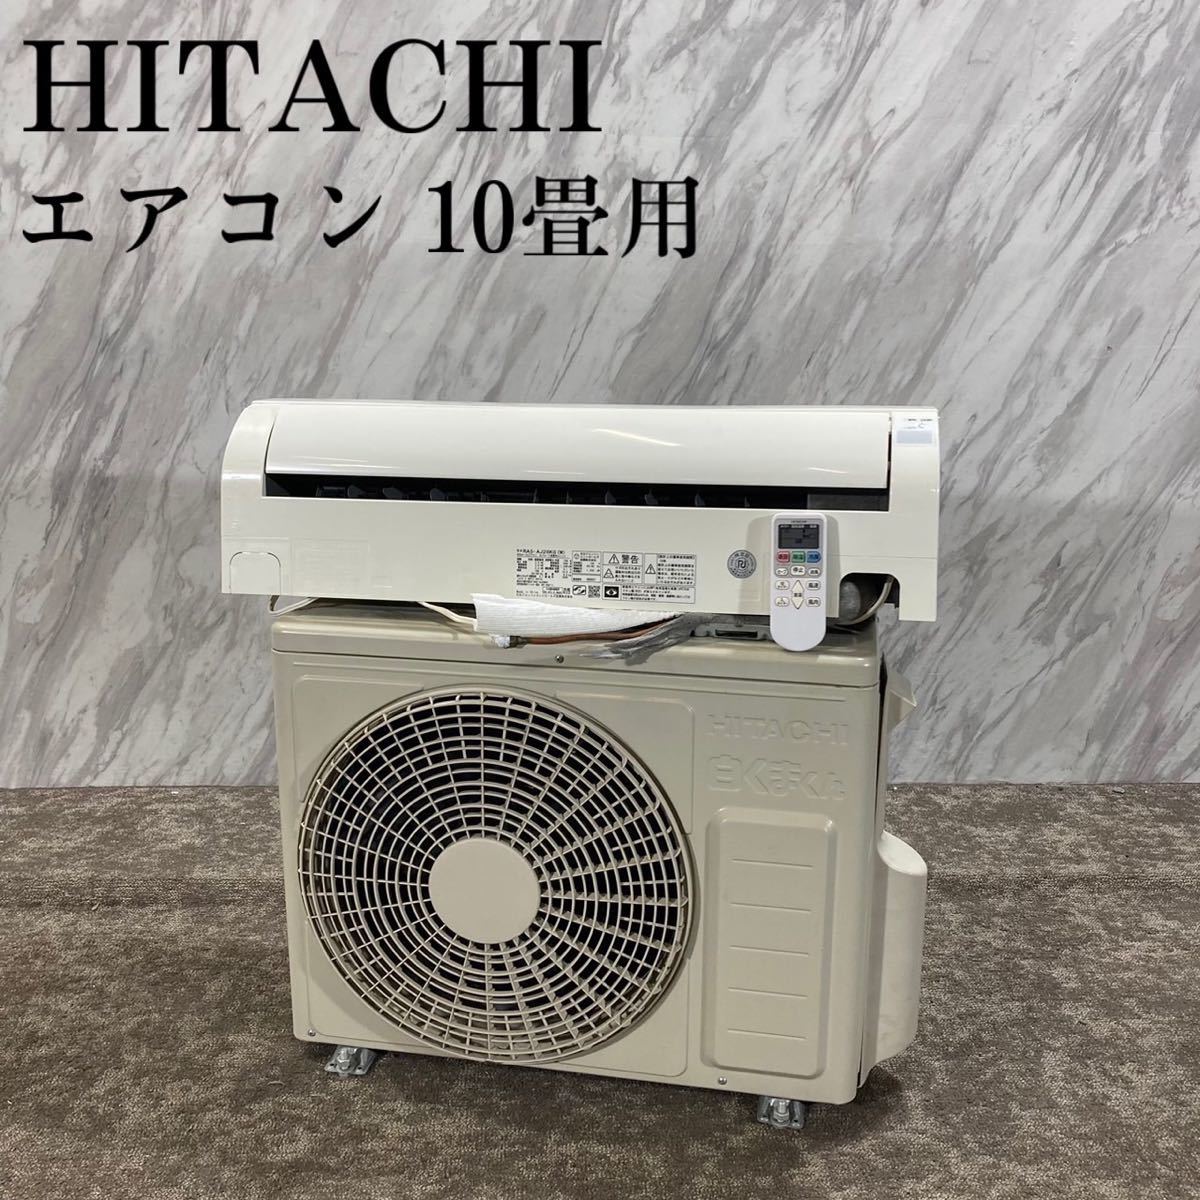 HITACHI エアコン RAS-SH28LE9 (W) 10畳用 K382-